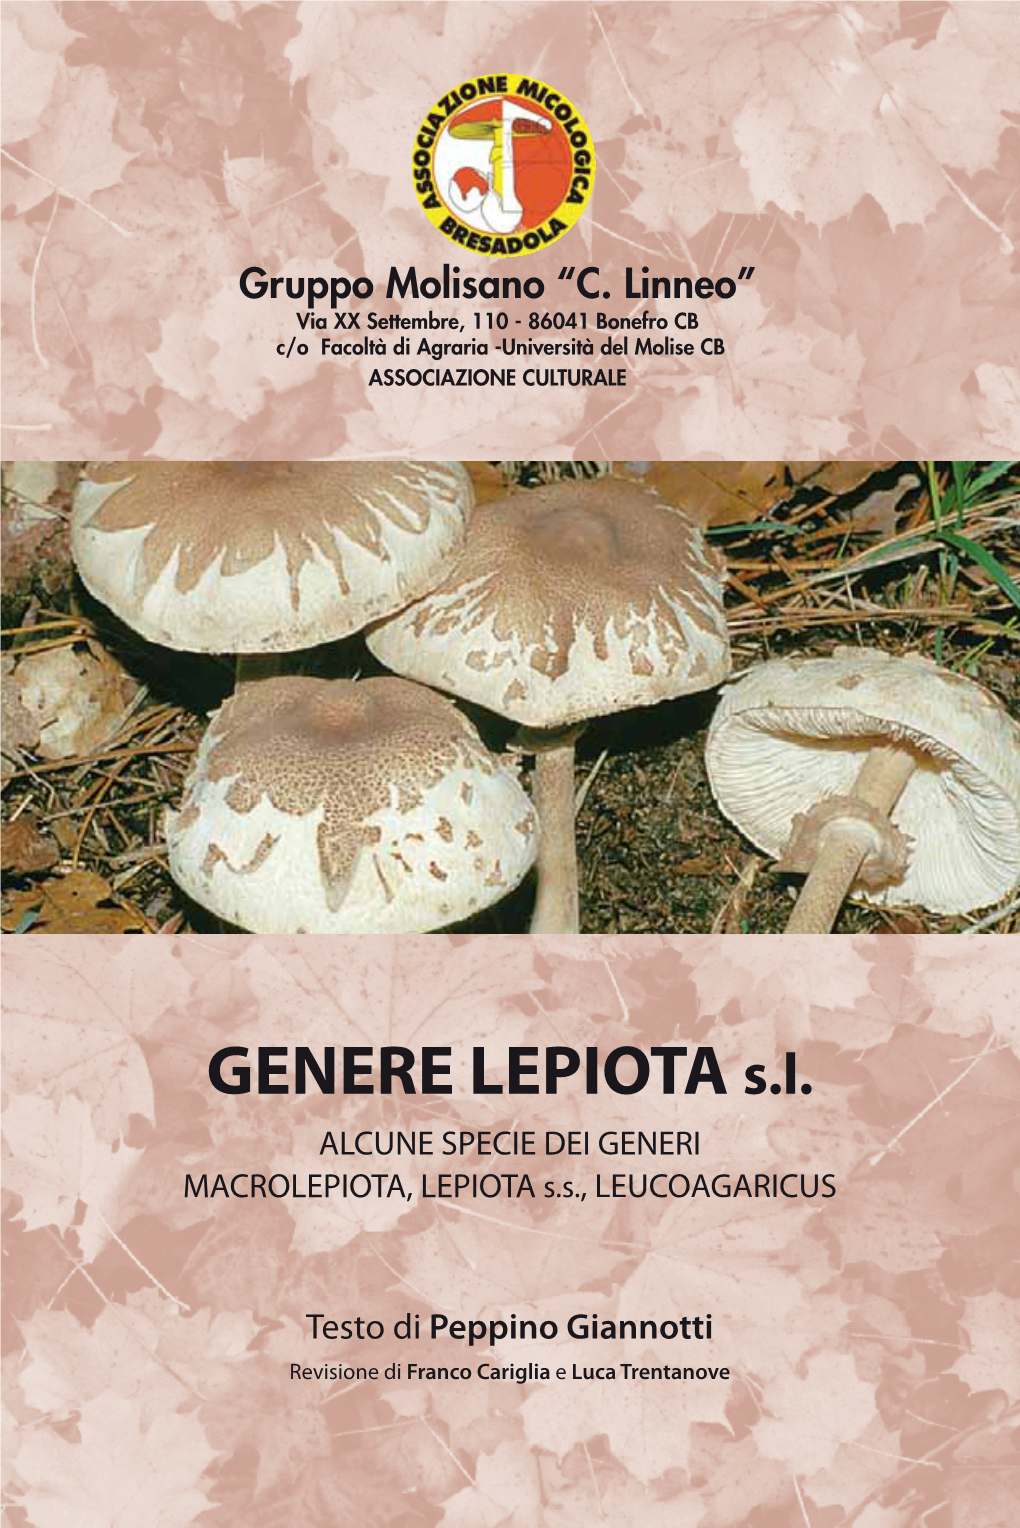 GENERE LEPIOTA S.L. ALCUNE SPECIE DEI GENERI MACROLEPIOTA, LEPIOTA S.S., LEUCOAGARICUS